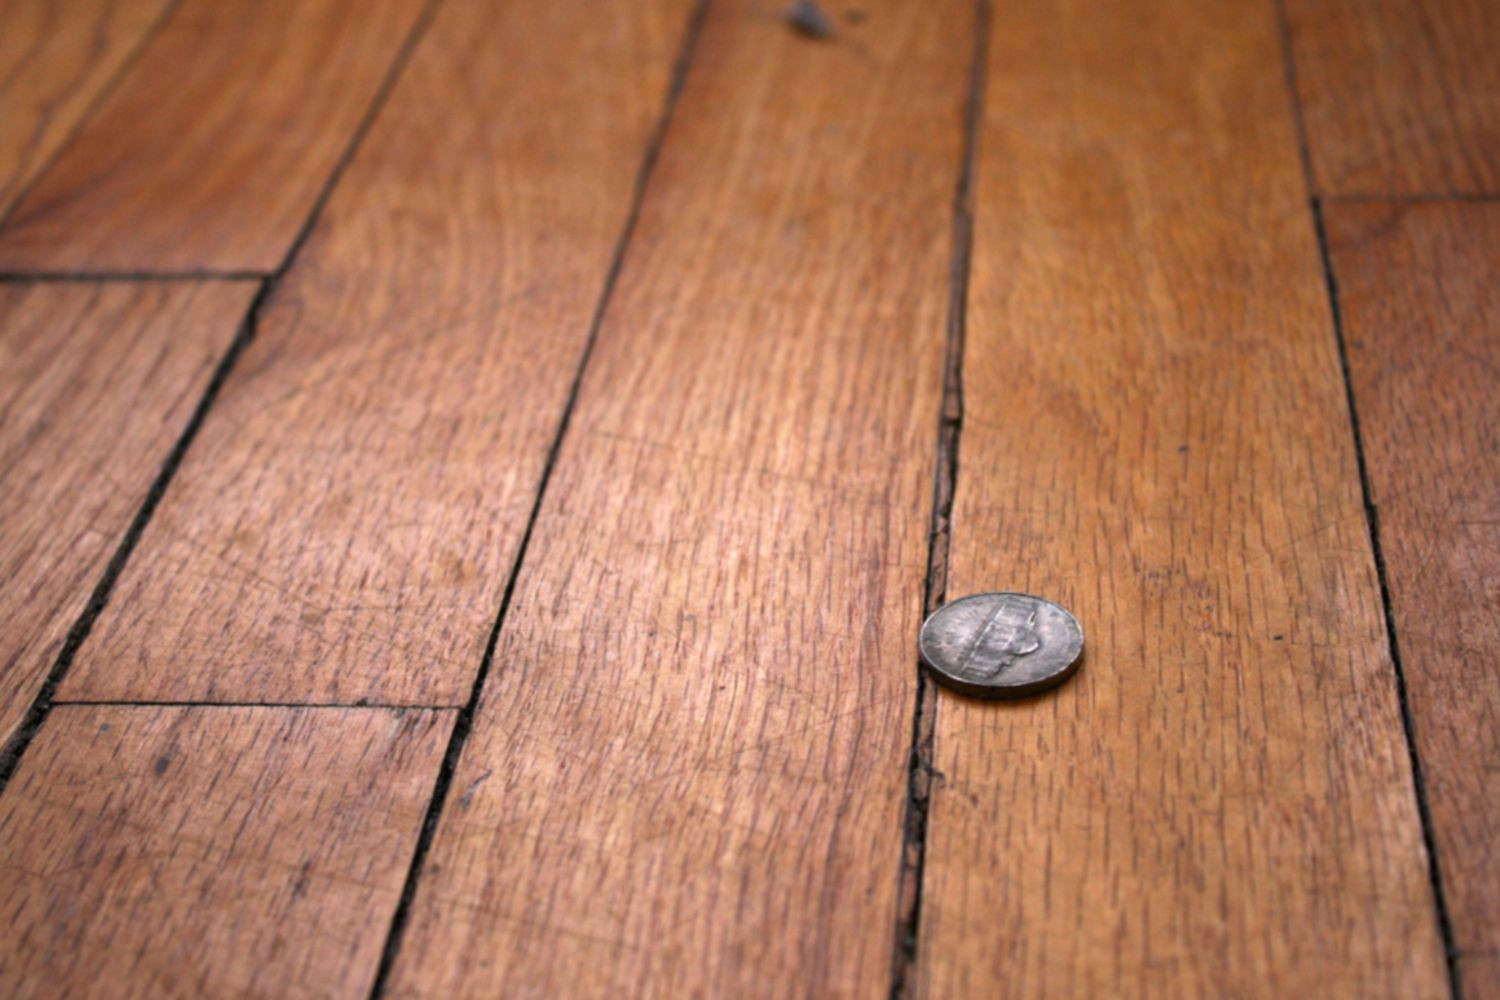 17 Lovable Hardwood Floor Stain Not Drying 2022 free download hardwood floor stain not drying of how to repair gaps between floorboards intended for wood floor with gaps between boards 1500 x 1000 56a49eb25f9b58b7d0d7df8d